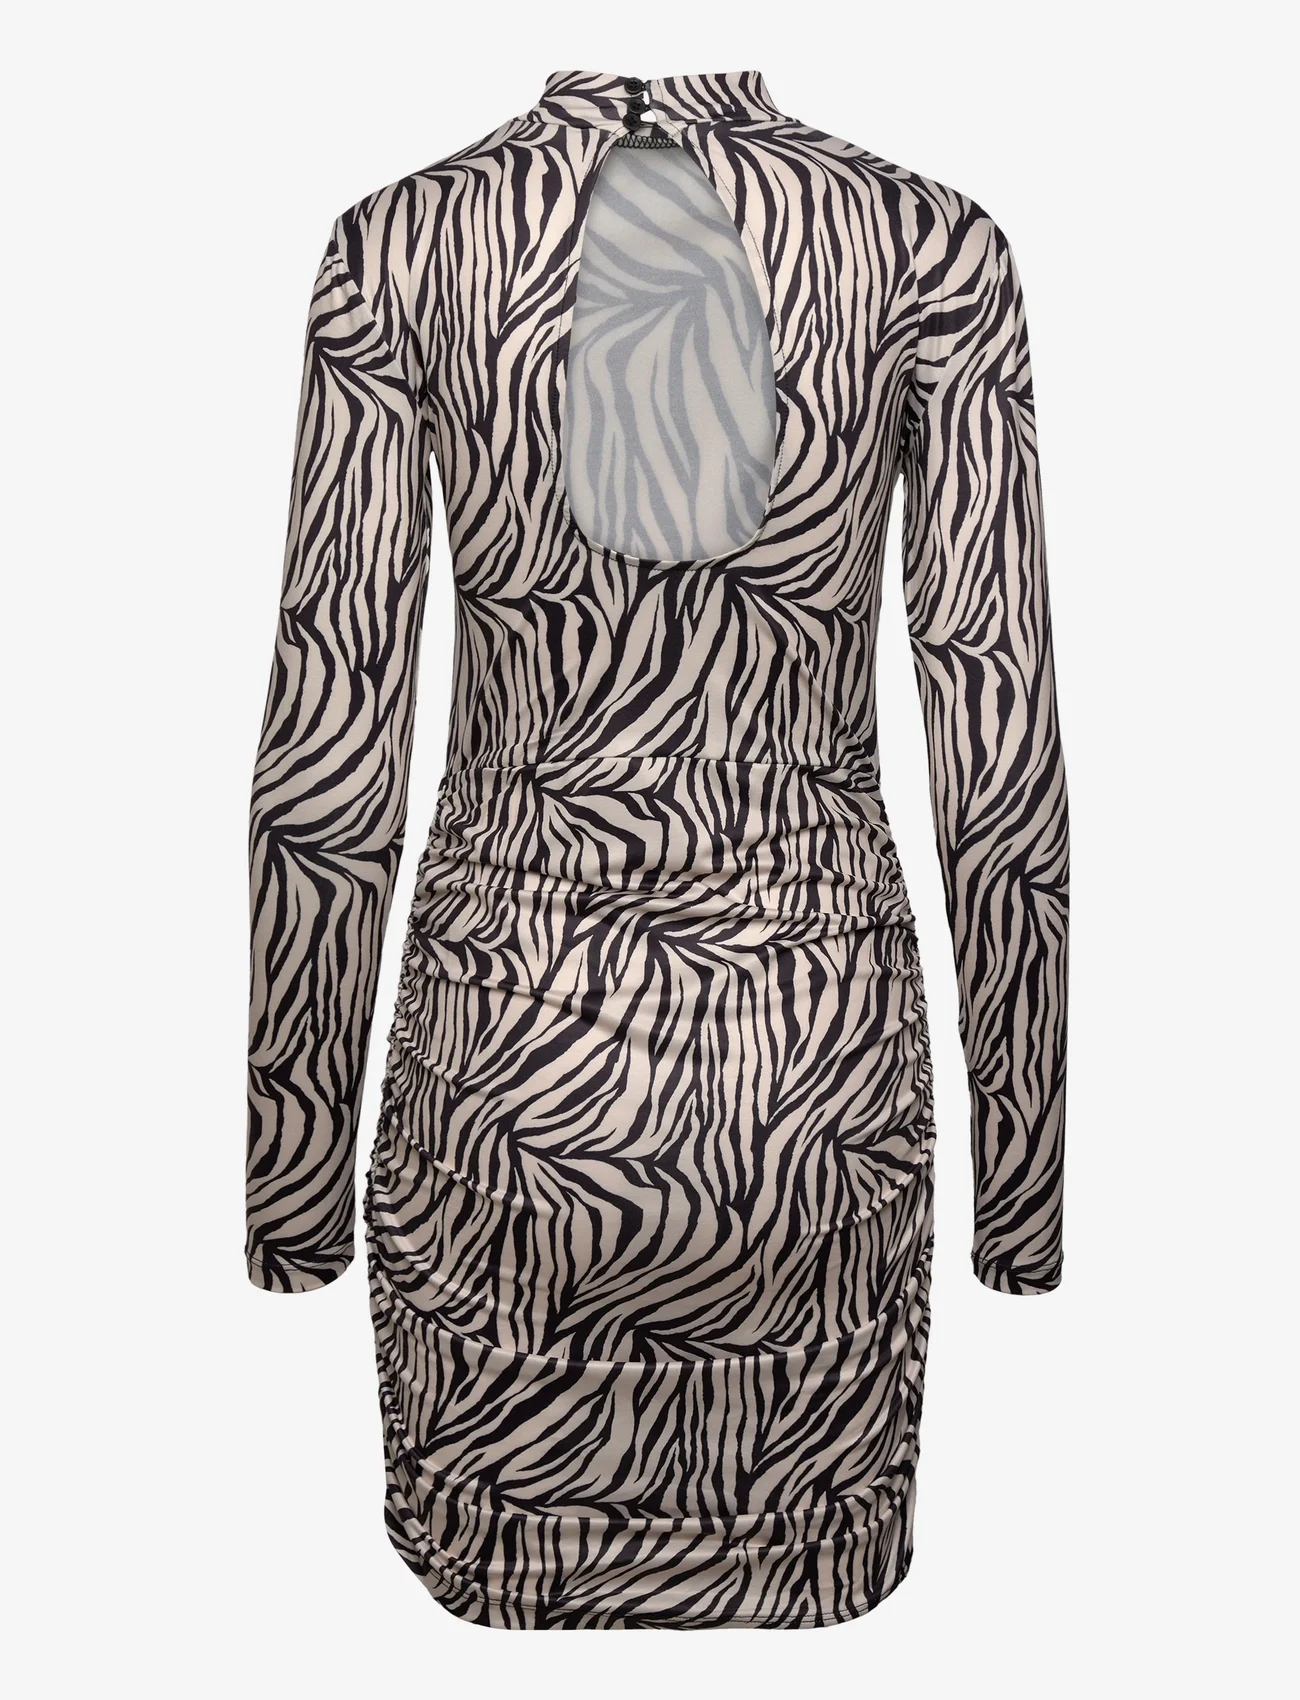 bzr - Regina Molisa dress - fodralklänningar - zebra print - 1